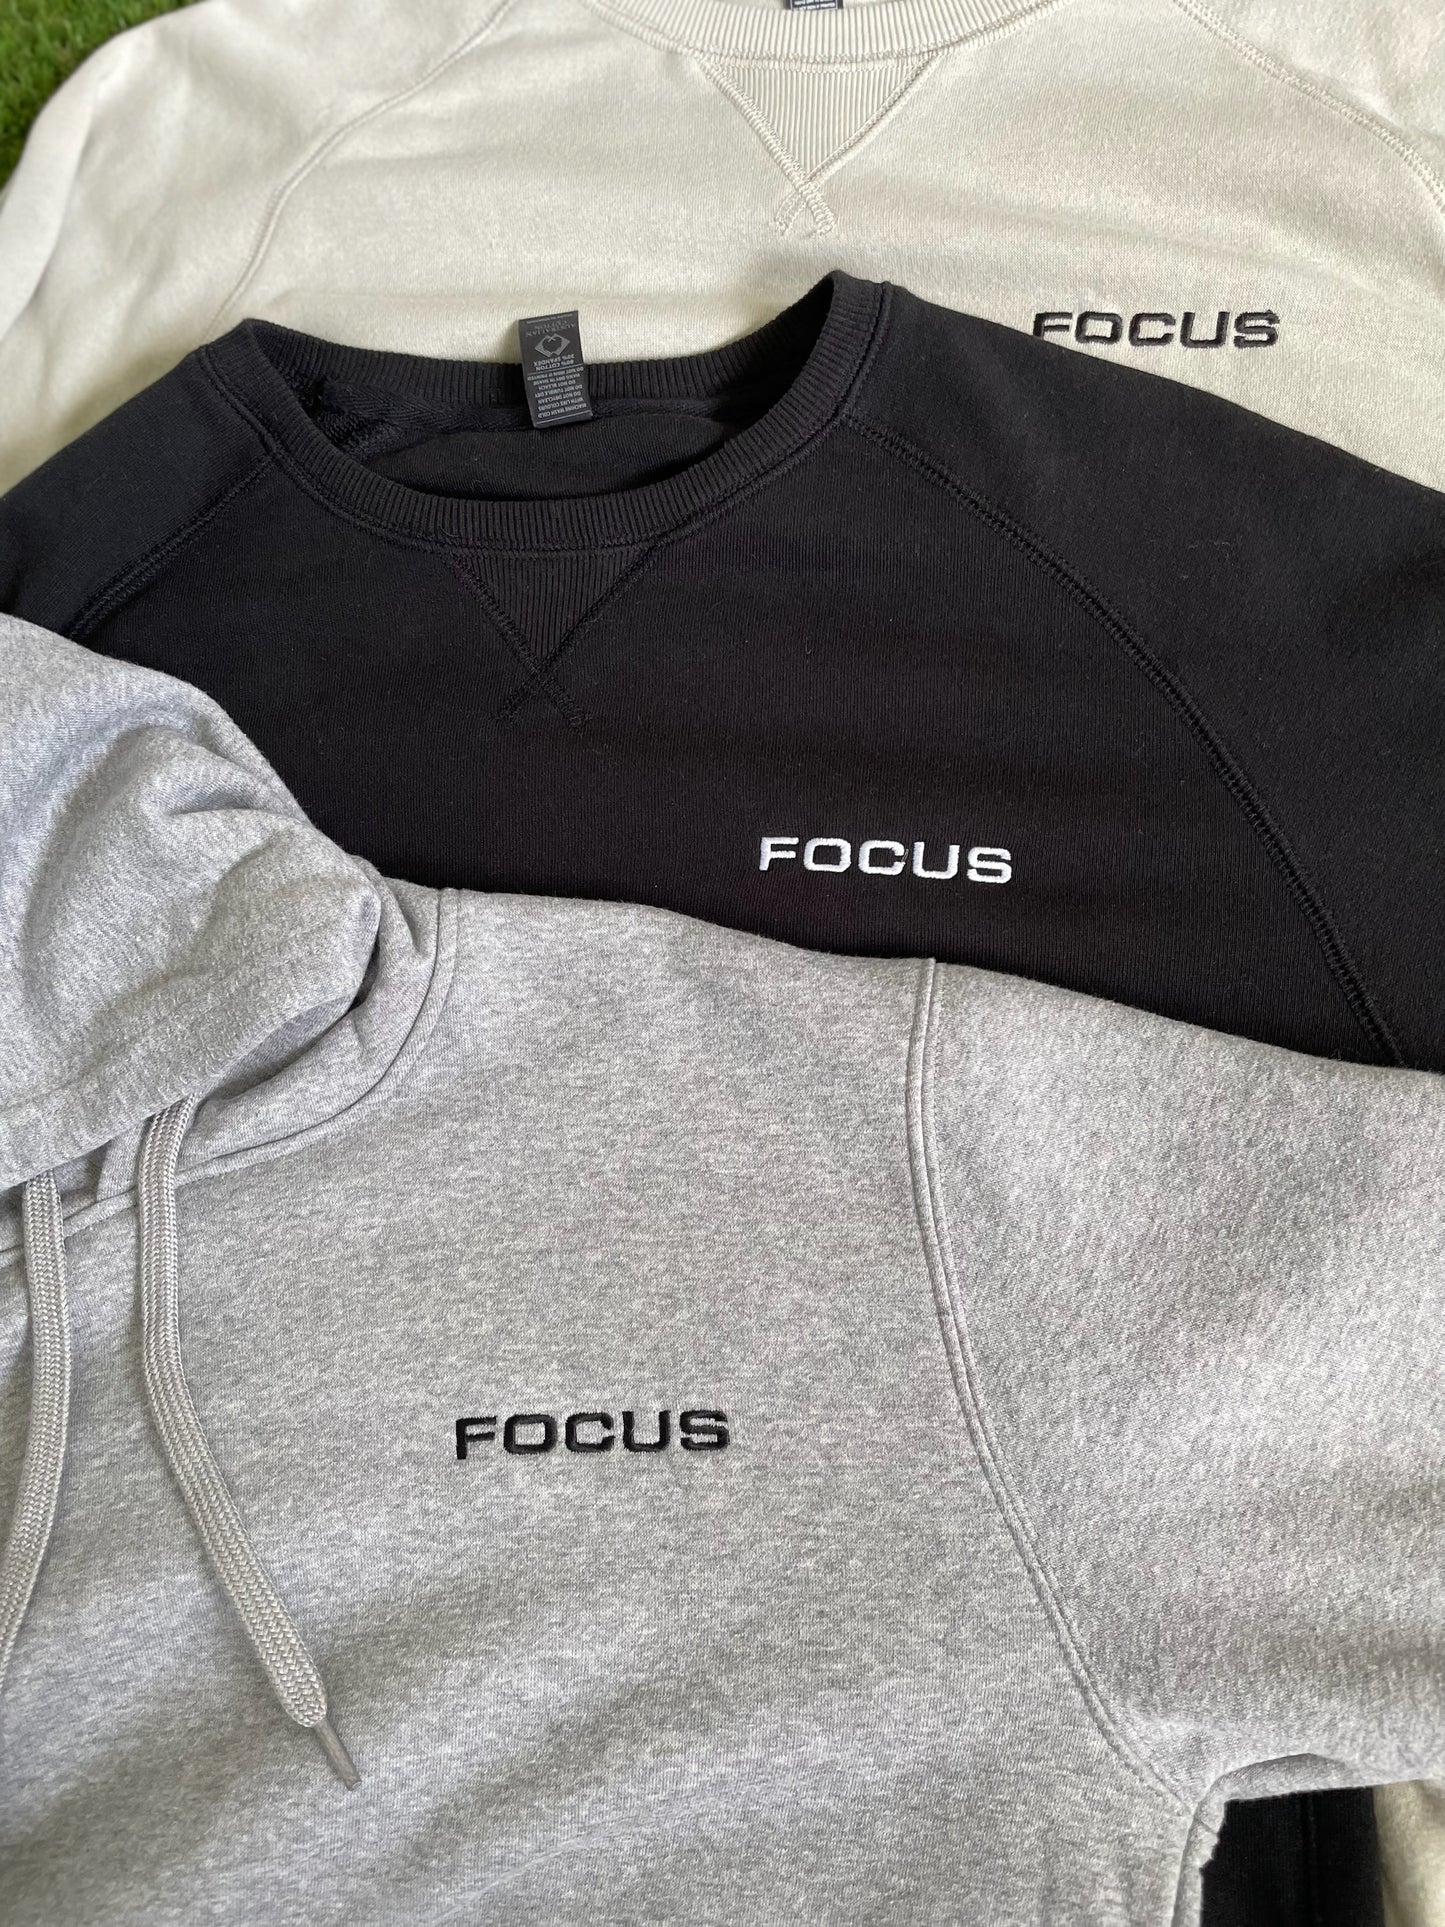 Focus Originals Leisure Wear - Fitted Hoodies